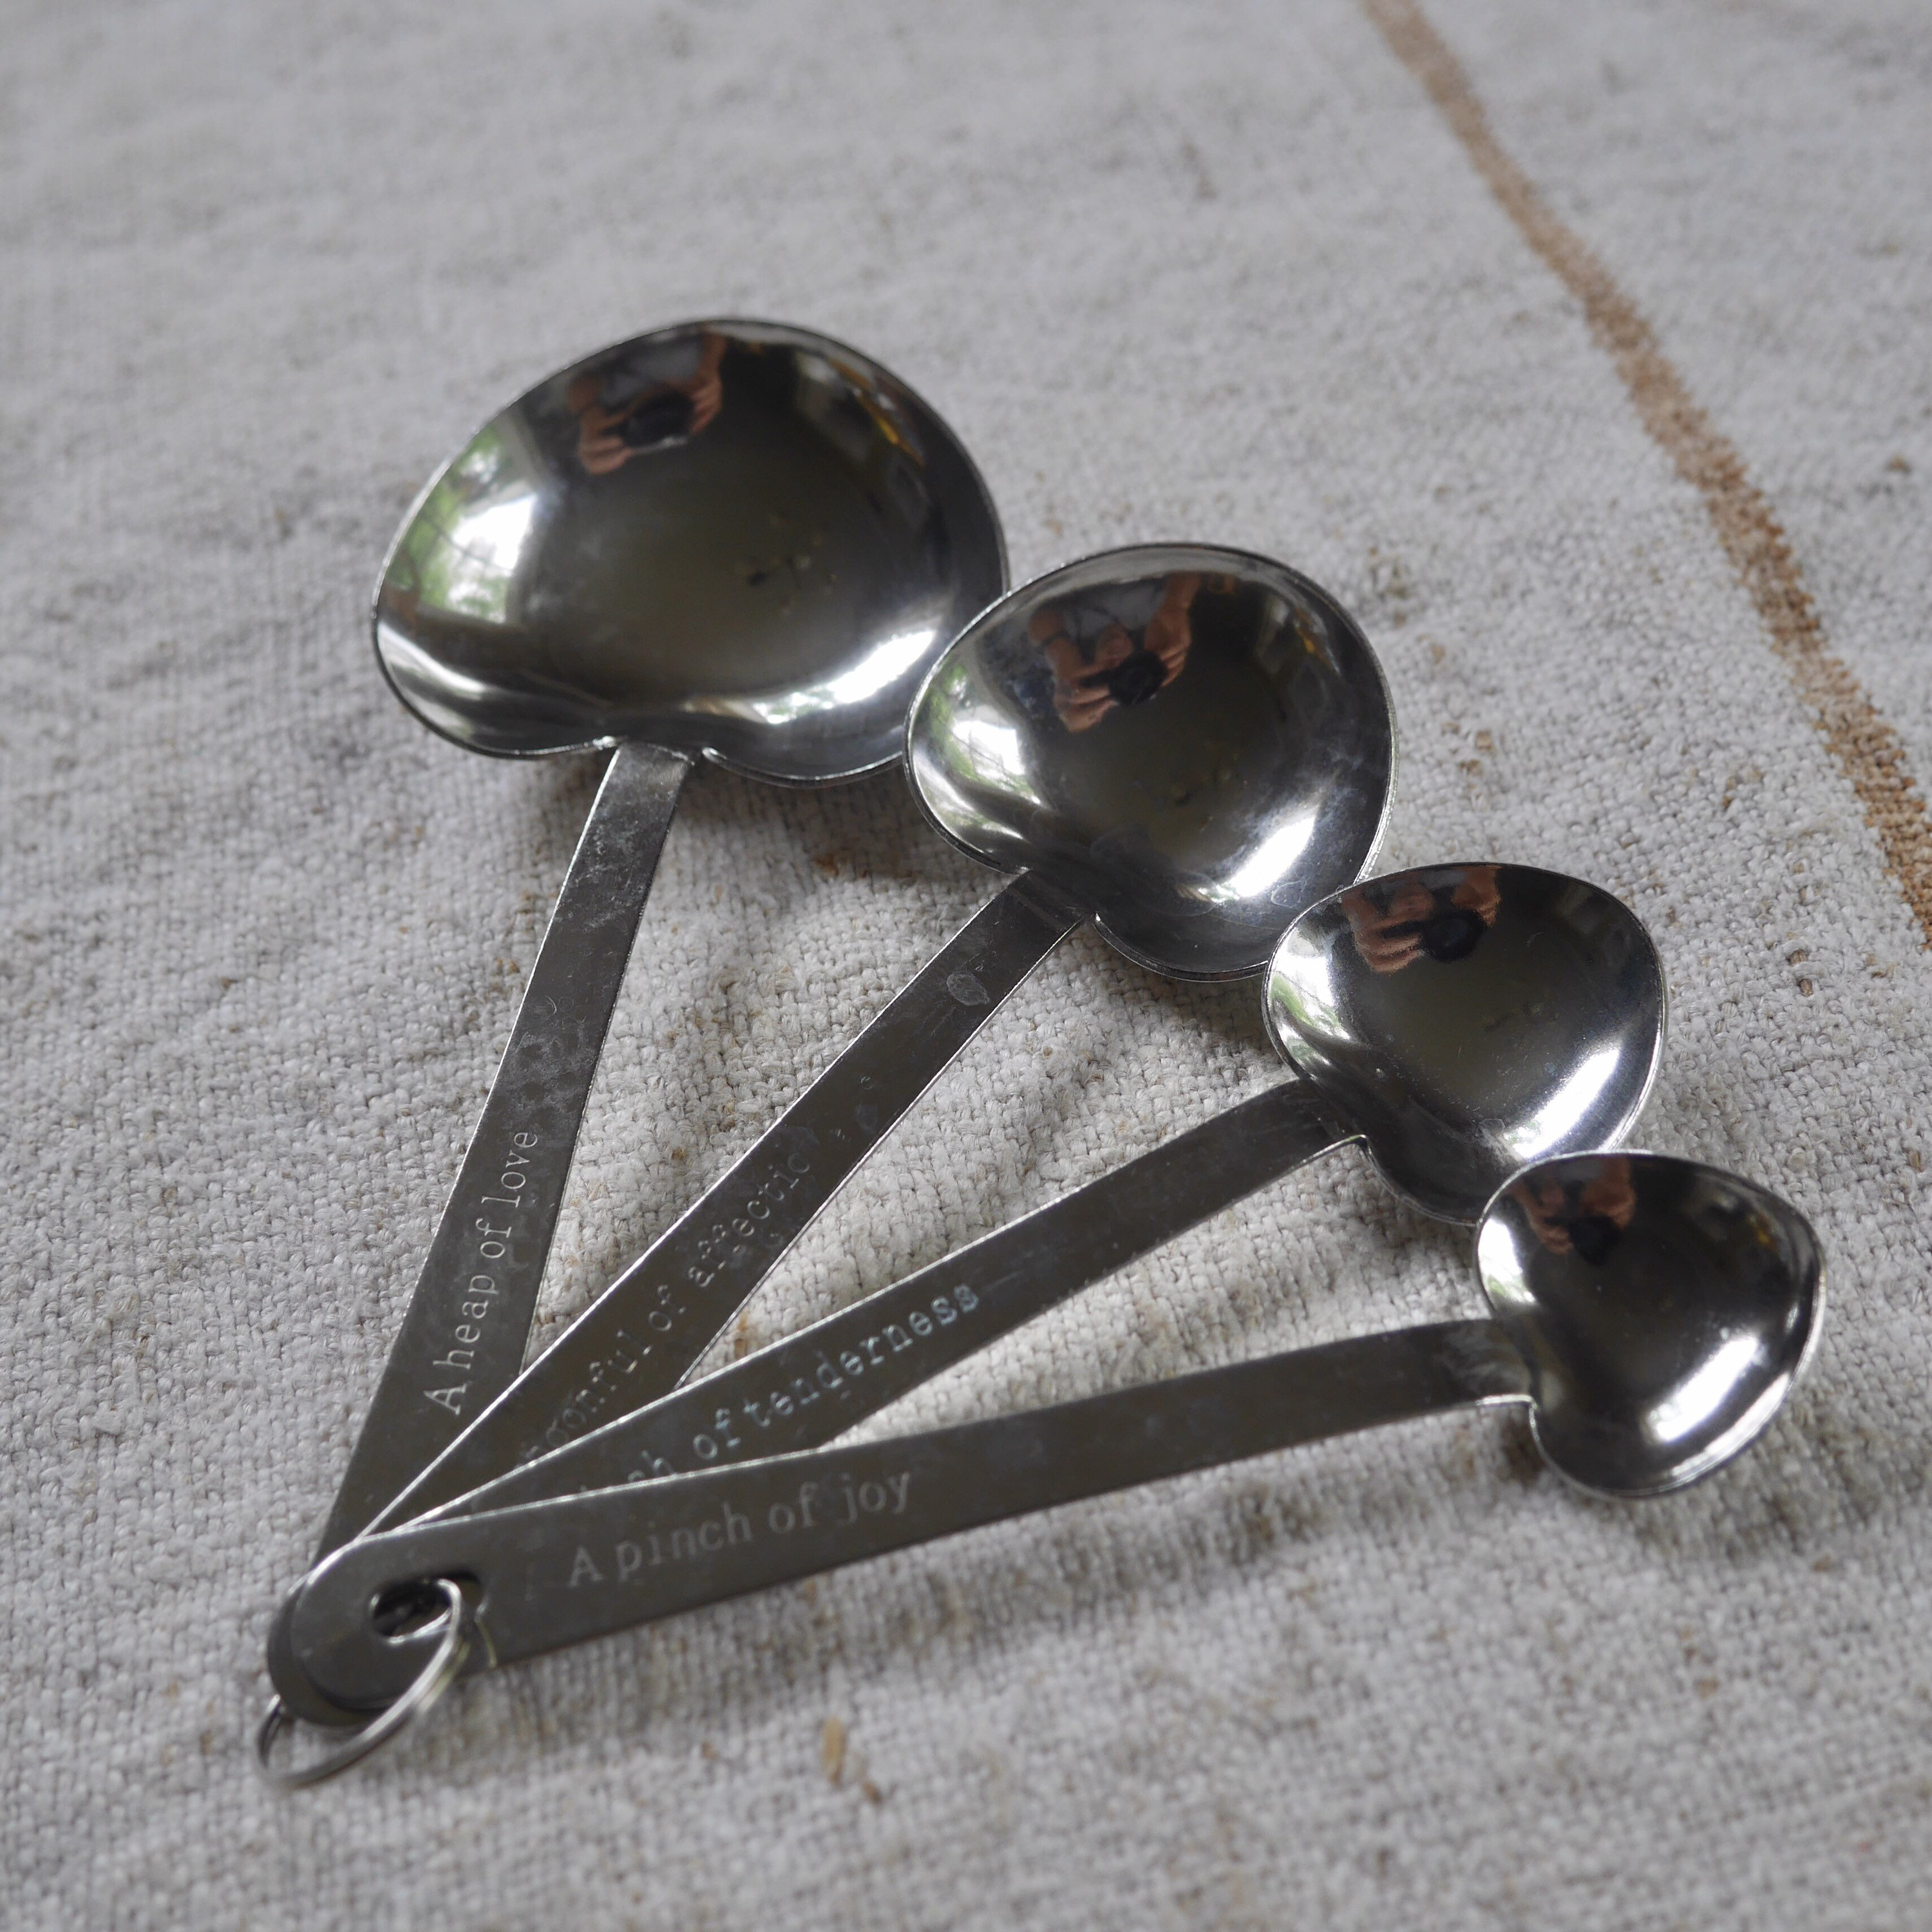 Stainless Steel Measuring Spoon Tablespoon Teaspoon - Bed Bath